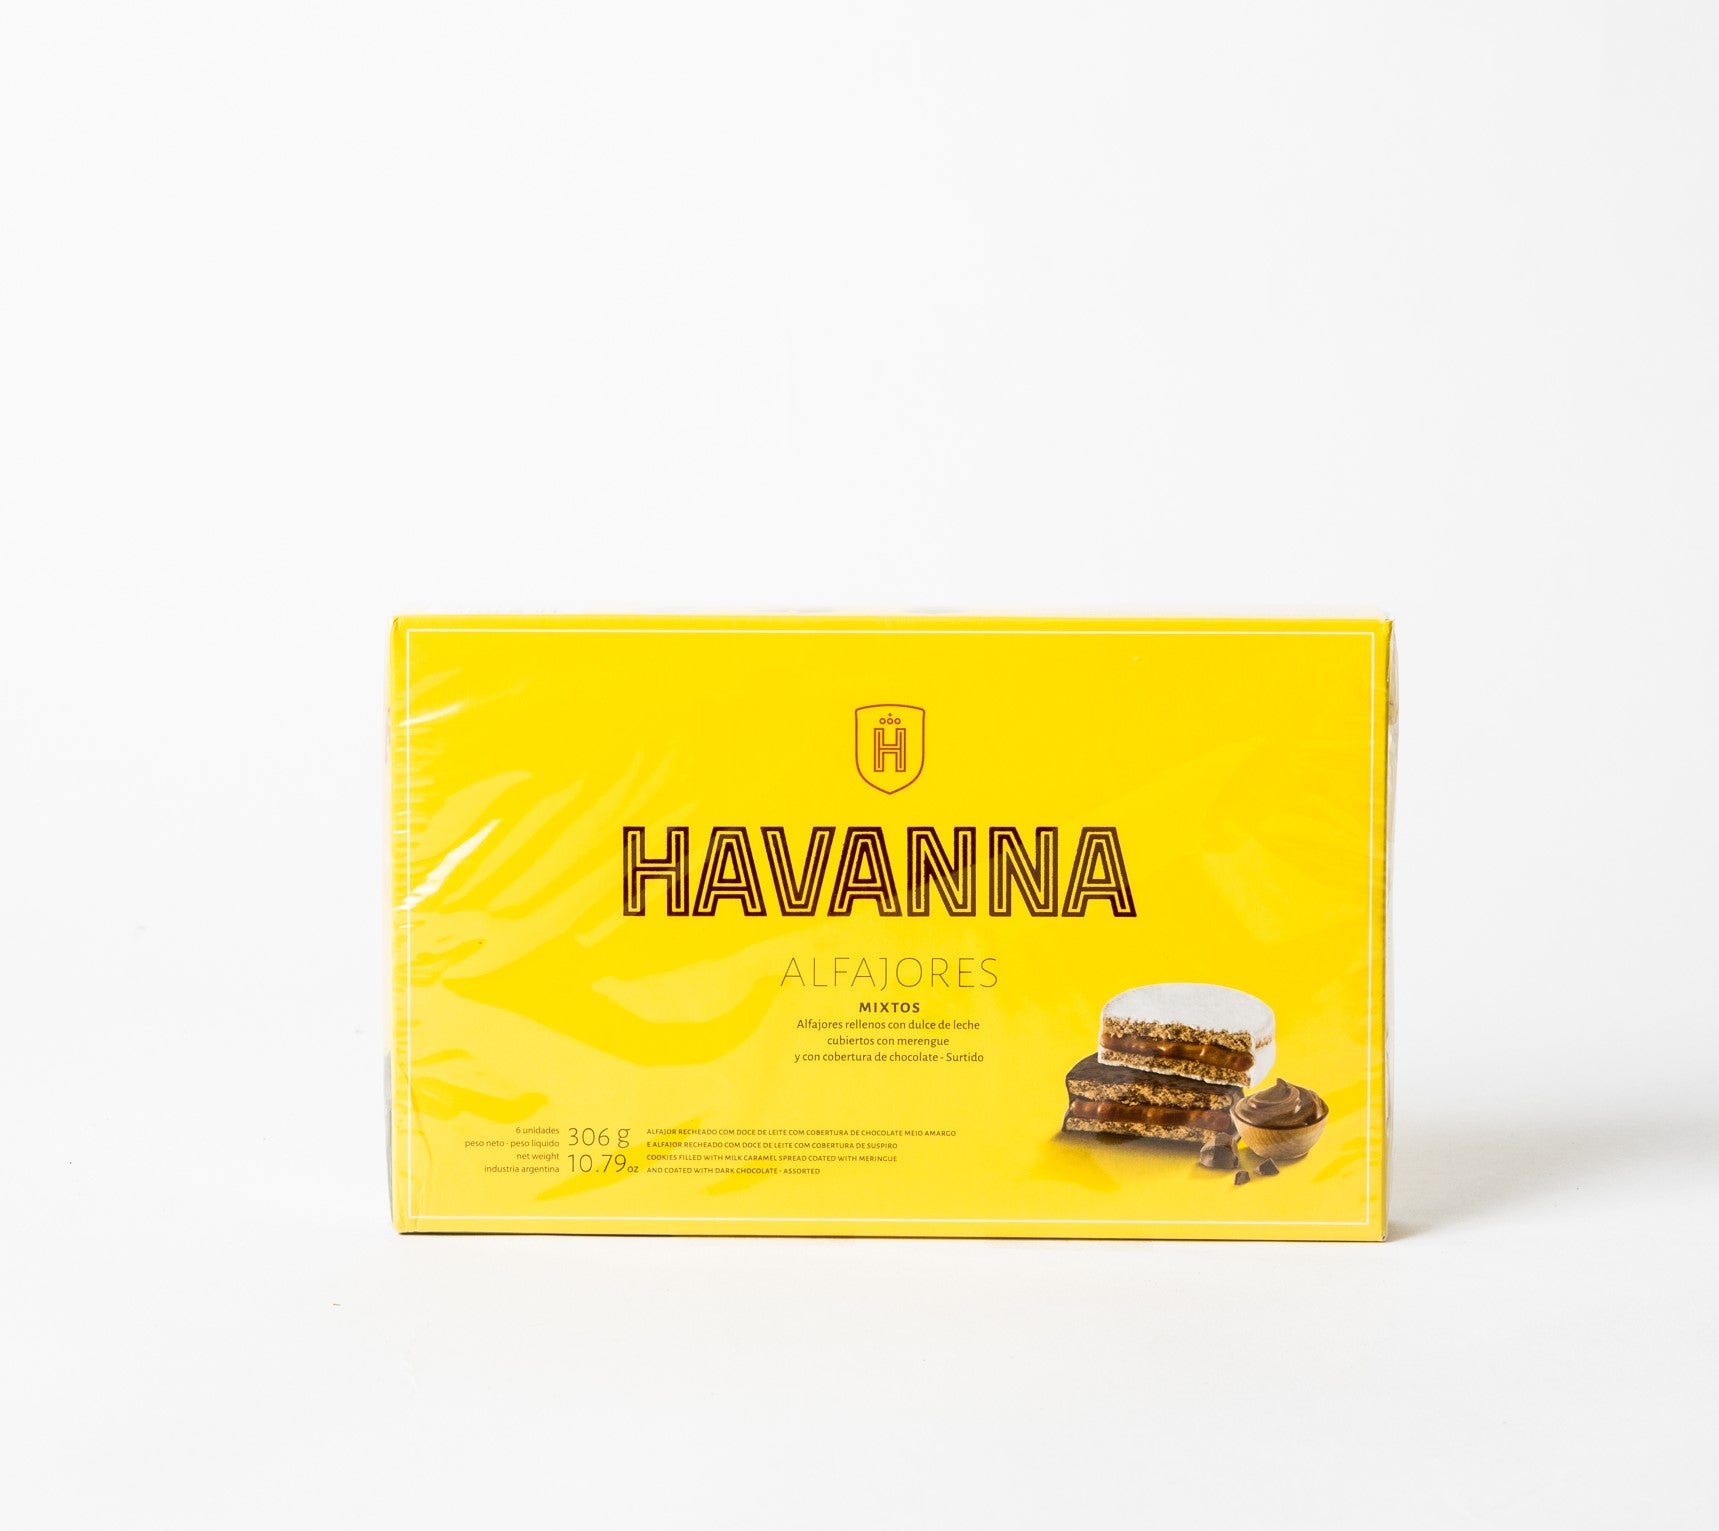  Alfajores Havanna de chocolate rellenos de dulce de